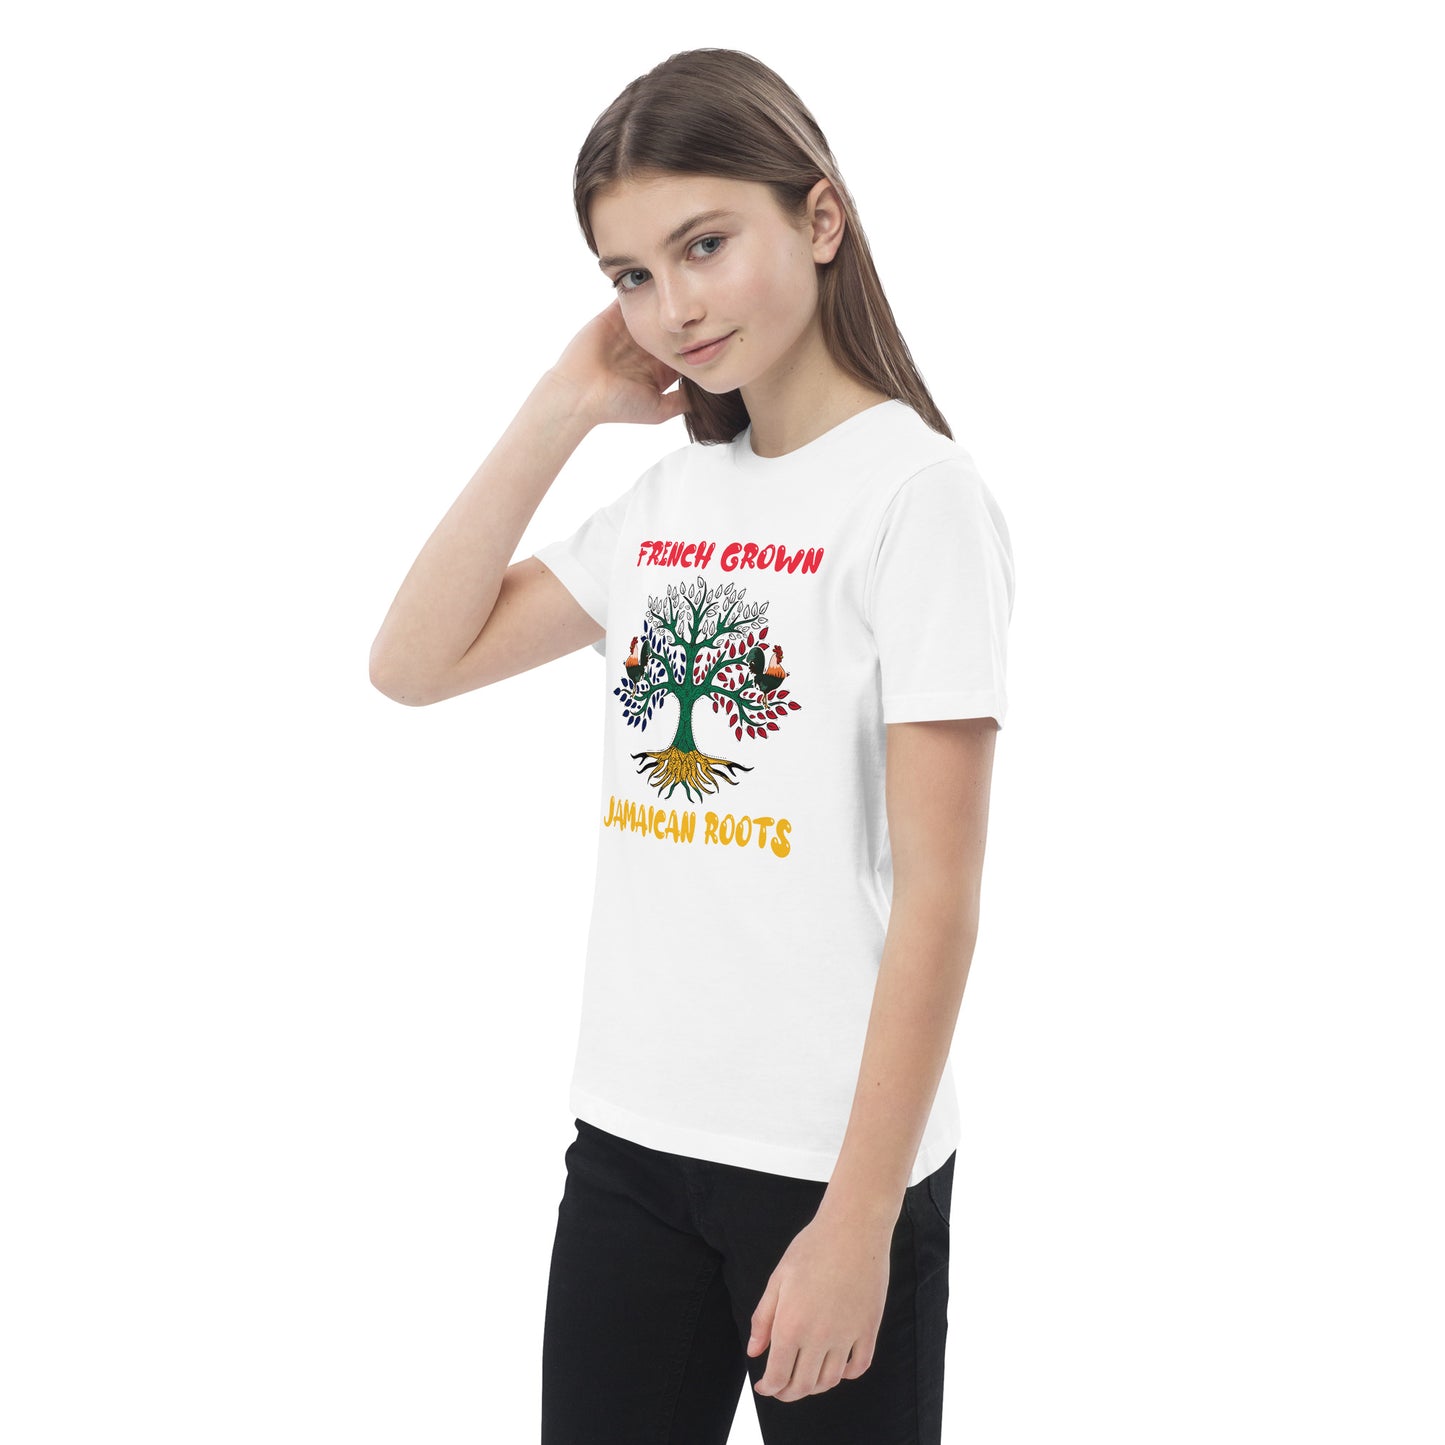 Organic cotton kids "French Grown" t-shirt